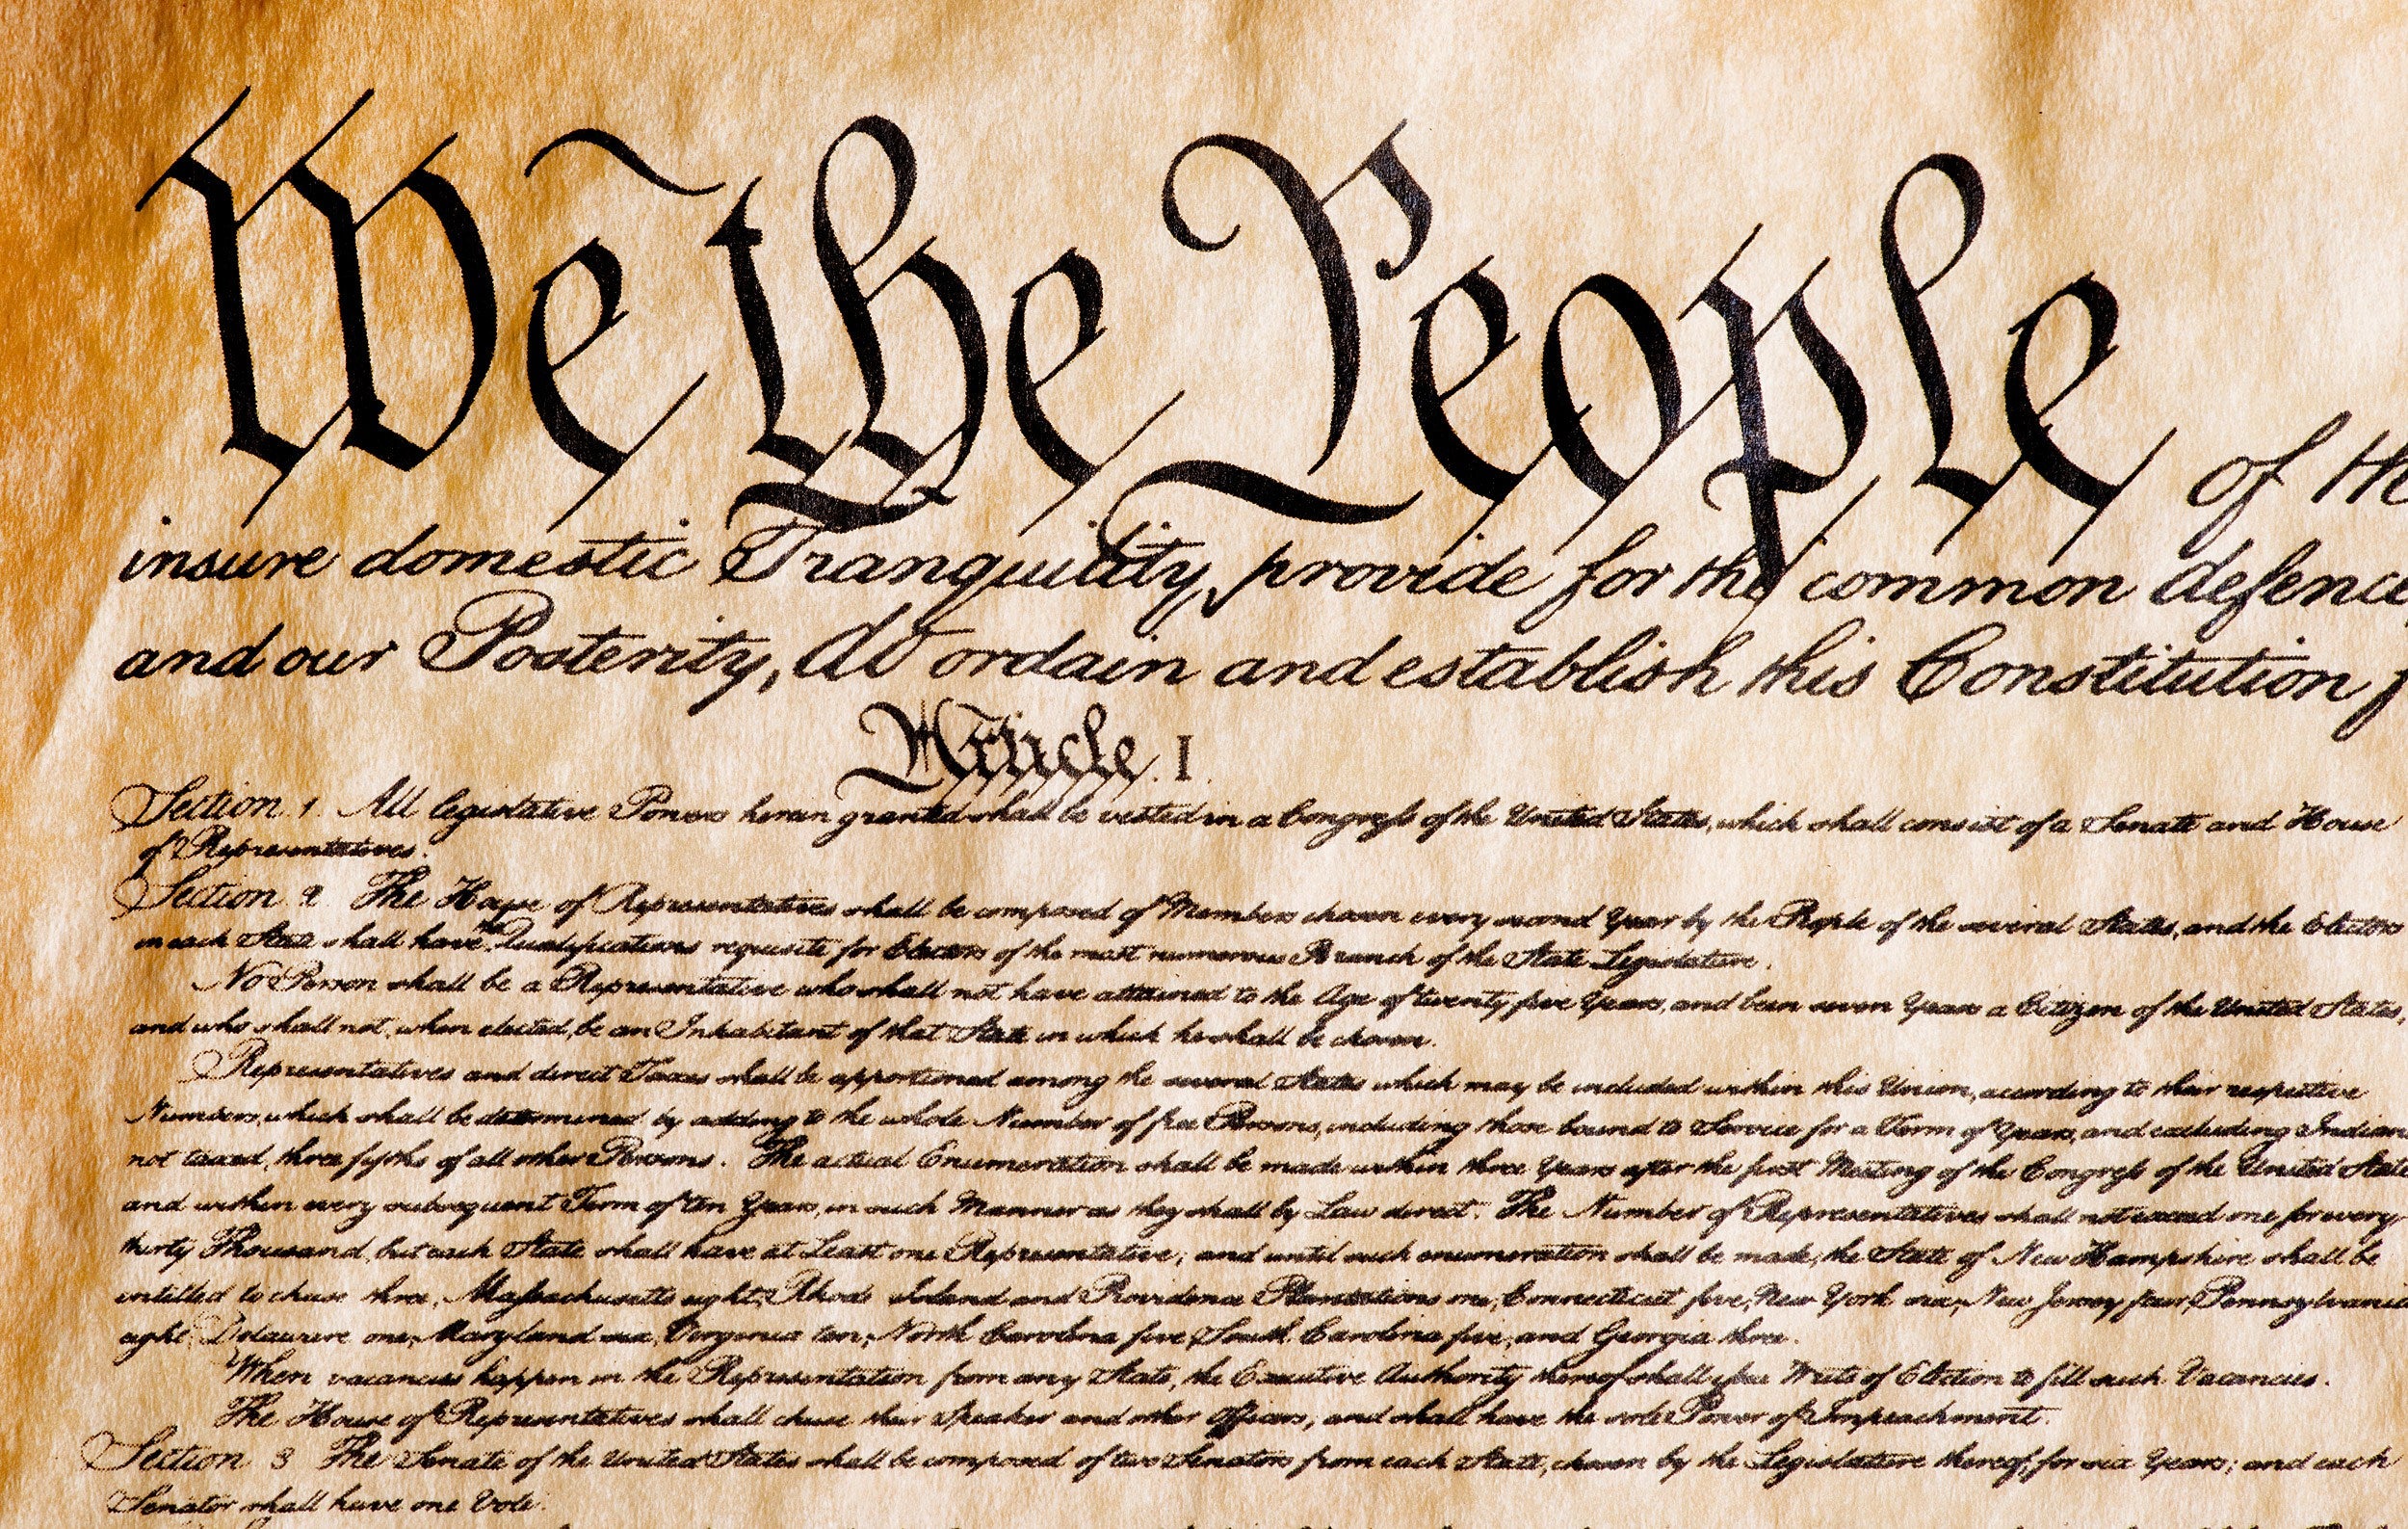 the constitution amendments - Year 3 - Quizizz